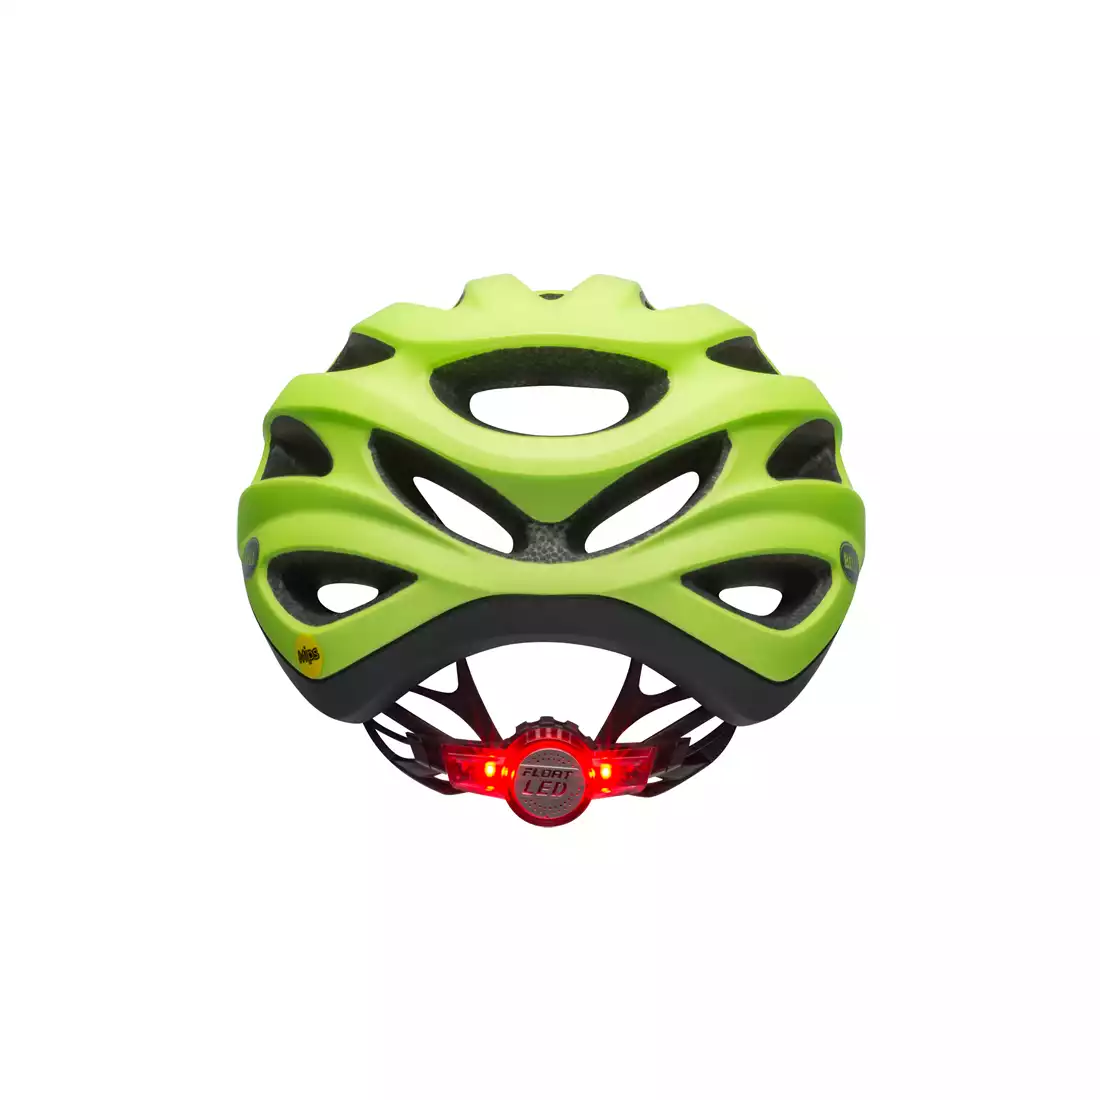 Giro Atmos Bicycle Helmet Pads Set Black Replacement Foam Pads Small /Medium 